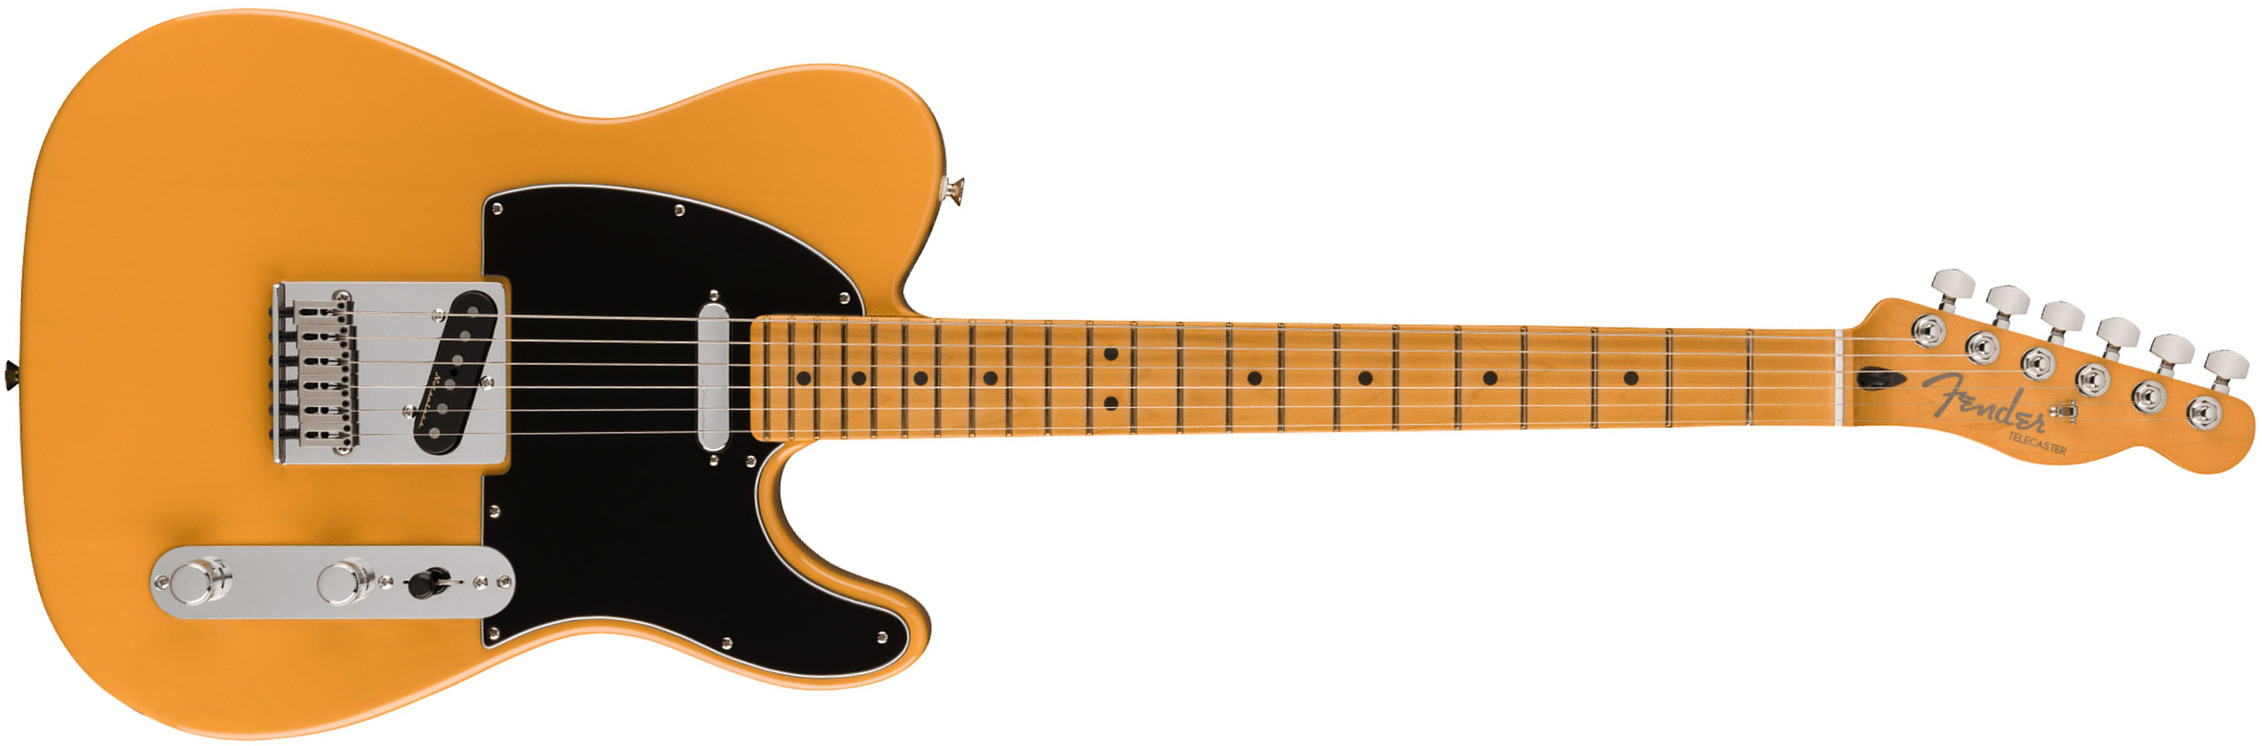 Fender Tele Player Plus Mex 2023 2s Ht Mn - Butterscotch Blonde - Tel shape electric guitar - Main picture